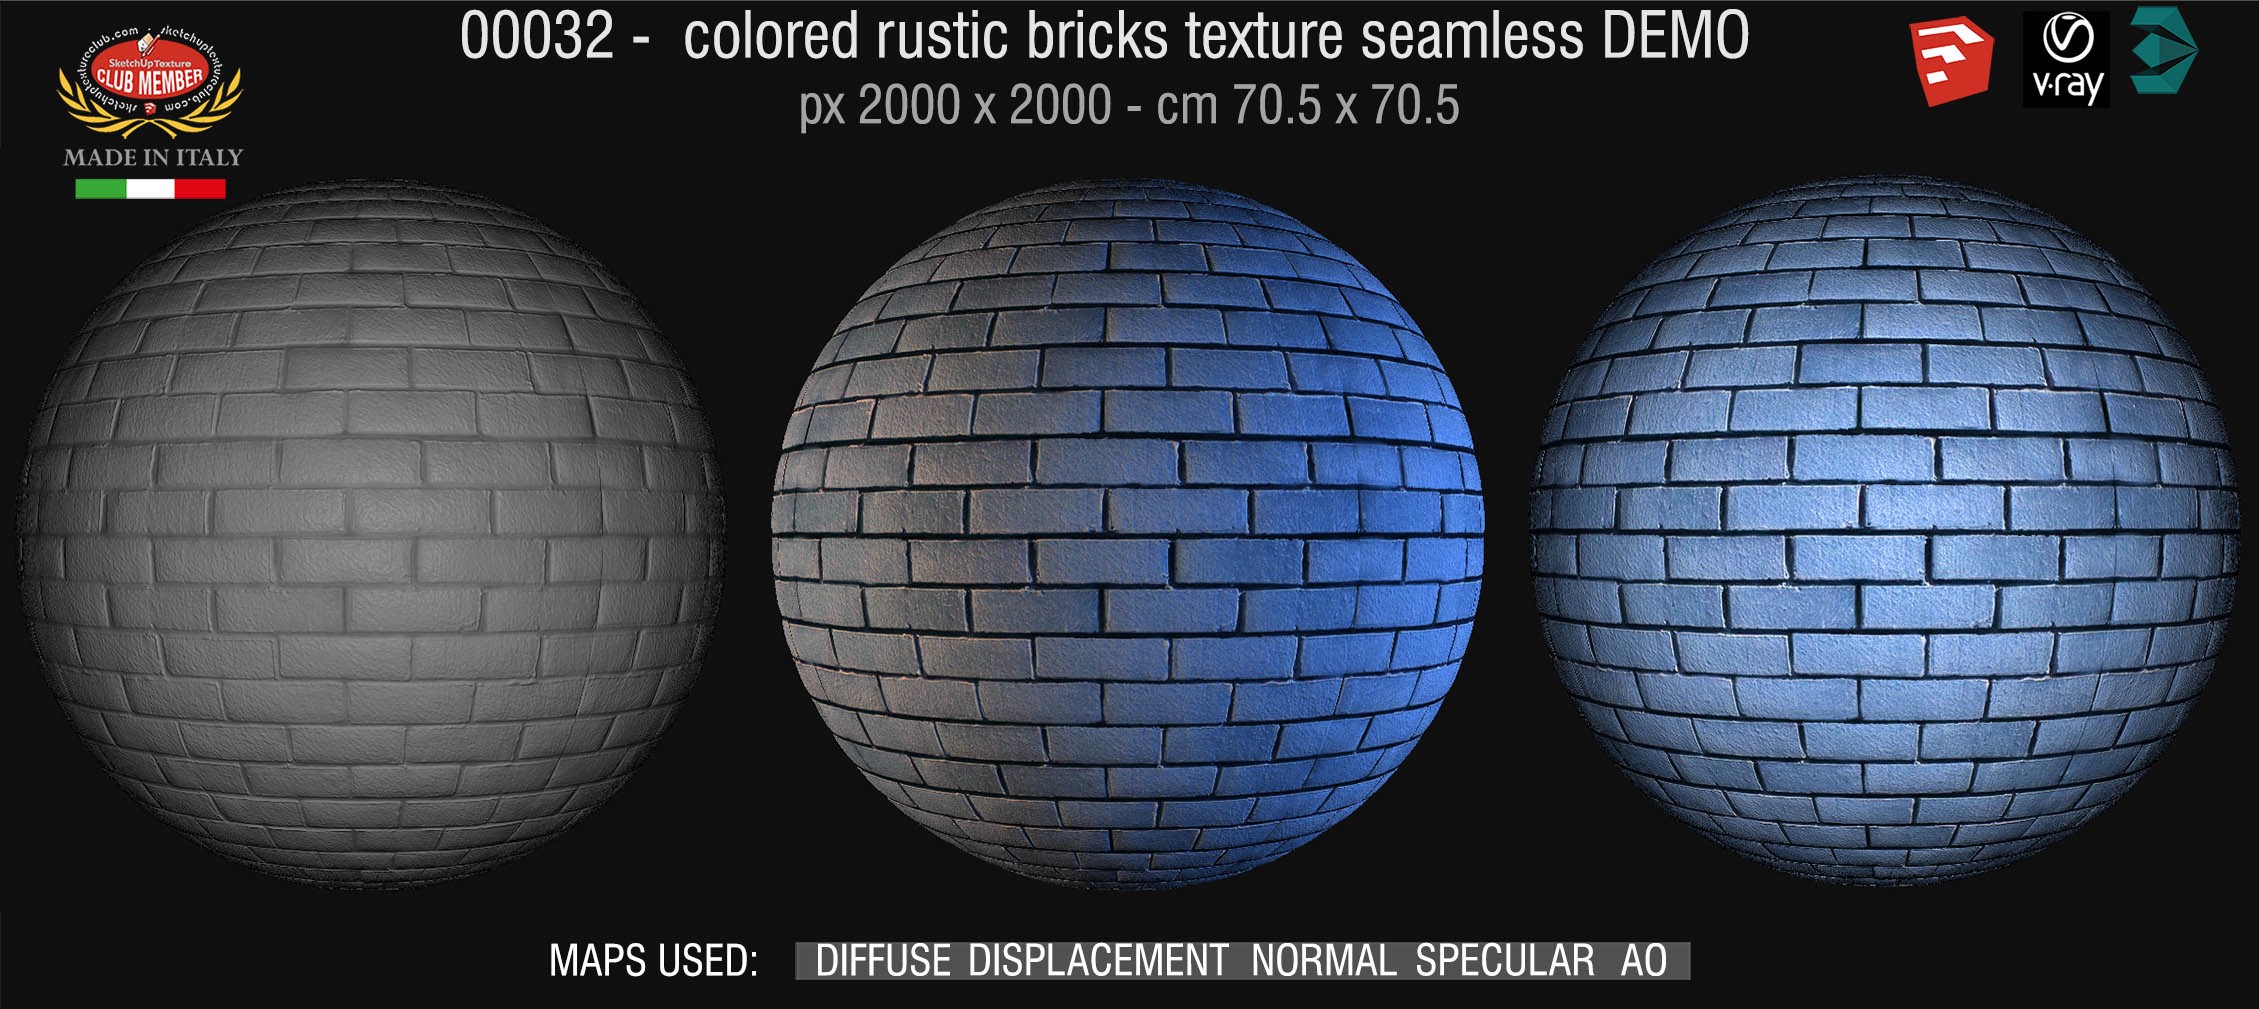 00032 colored rustic bricks texture seamless + maps DEMO